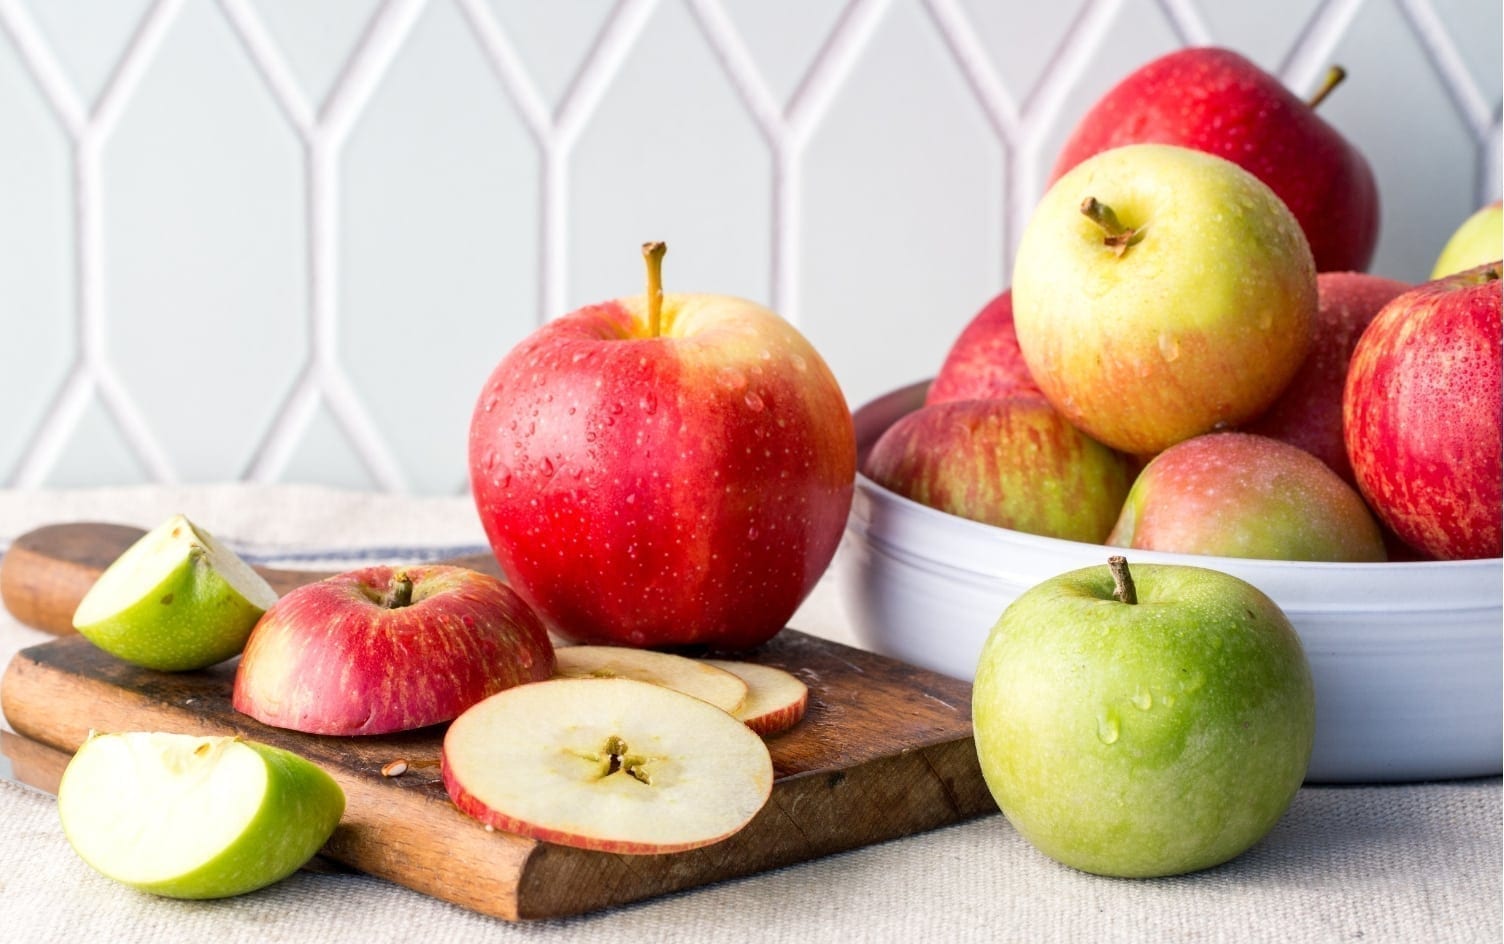 average-apple-has-about-80-calories